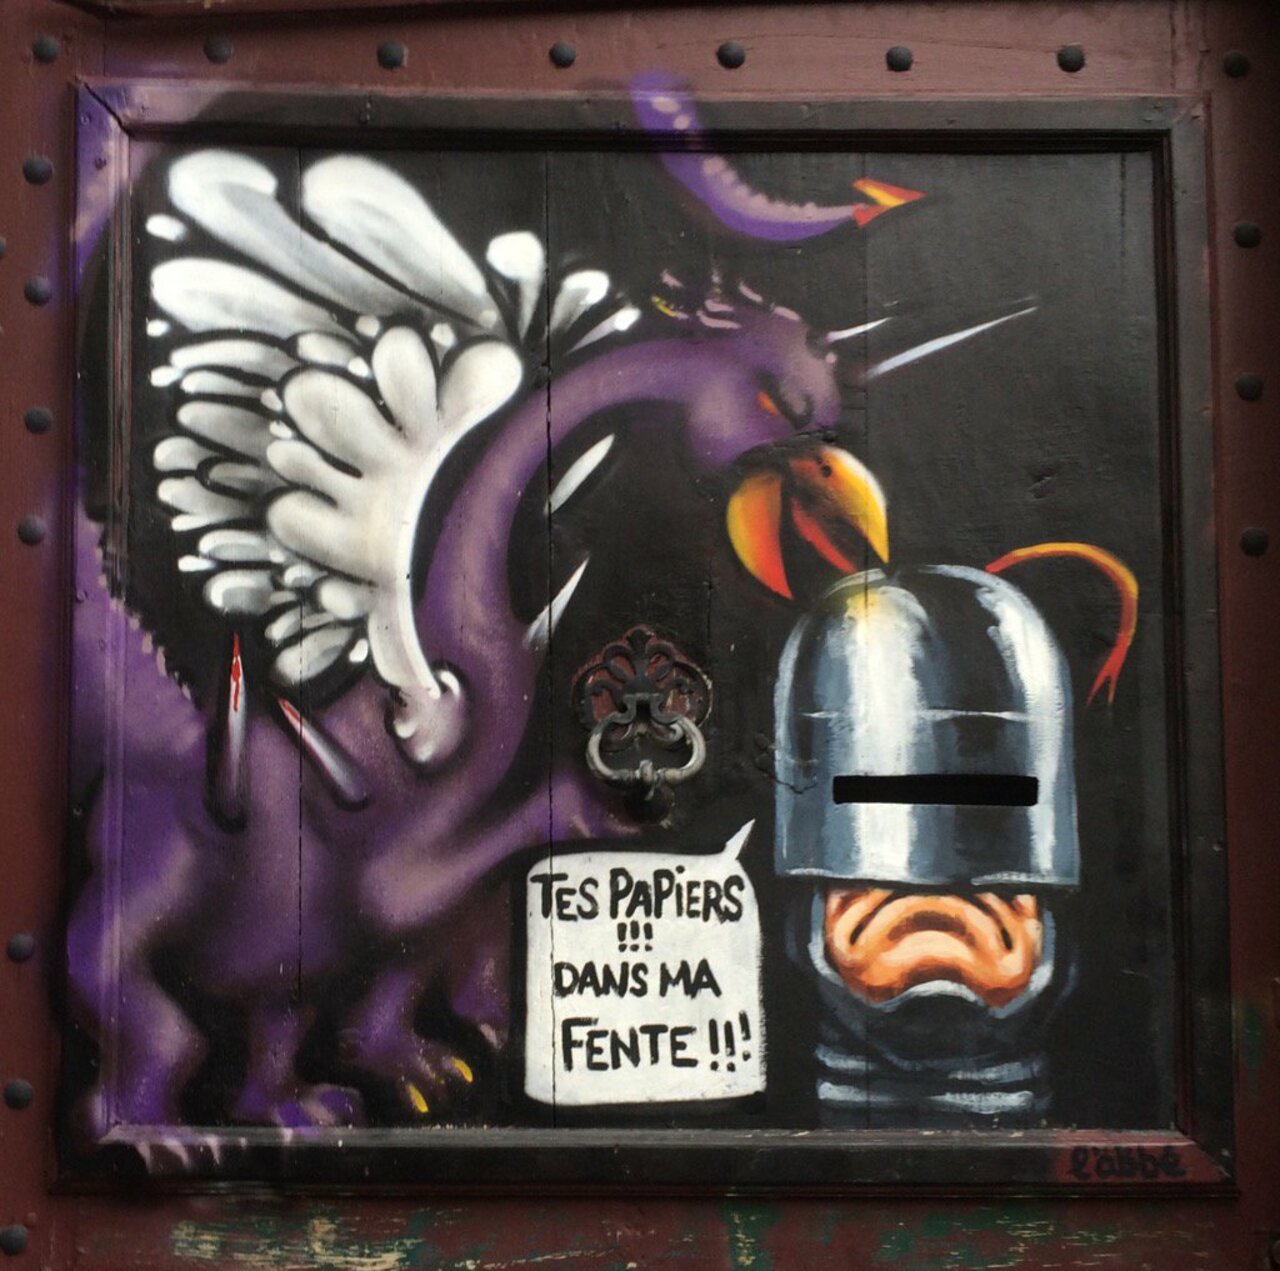 #StreetArt 539
#Graff #Graffiti #urbanart 
#photooftheday #picoftheday
#France #Auvergne #Clermont
10/2015 https://t.co/JPcVPvaBRa